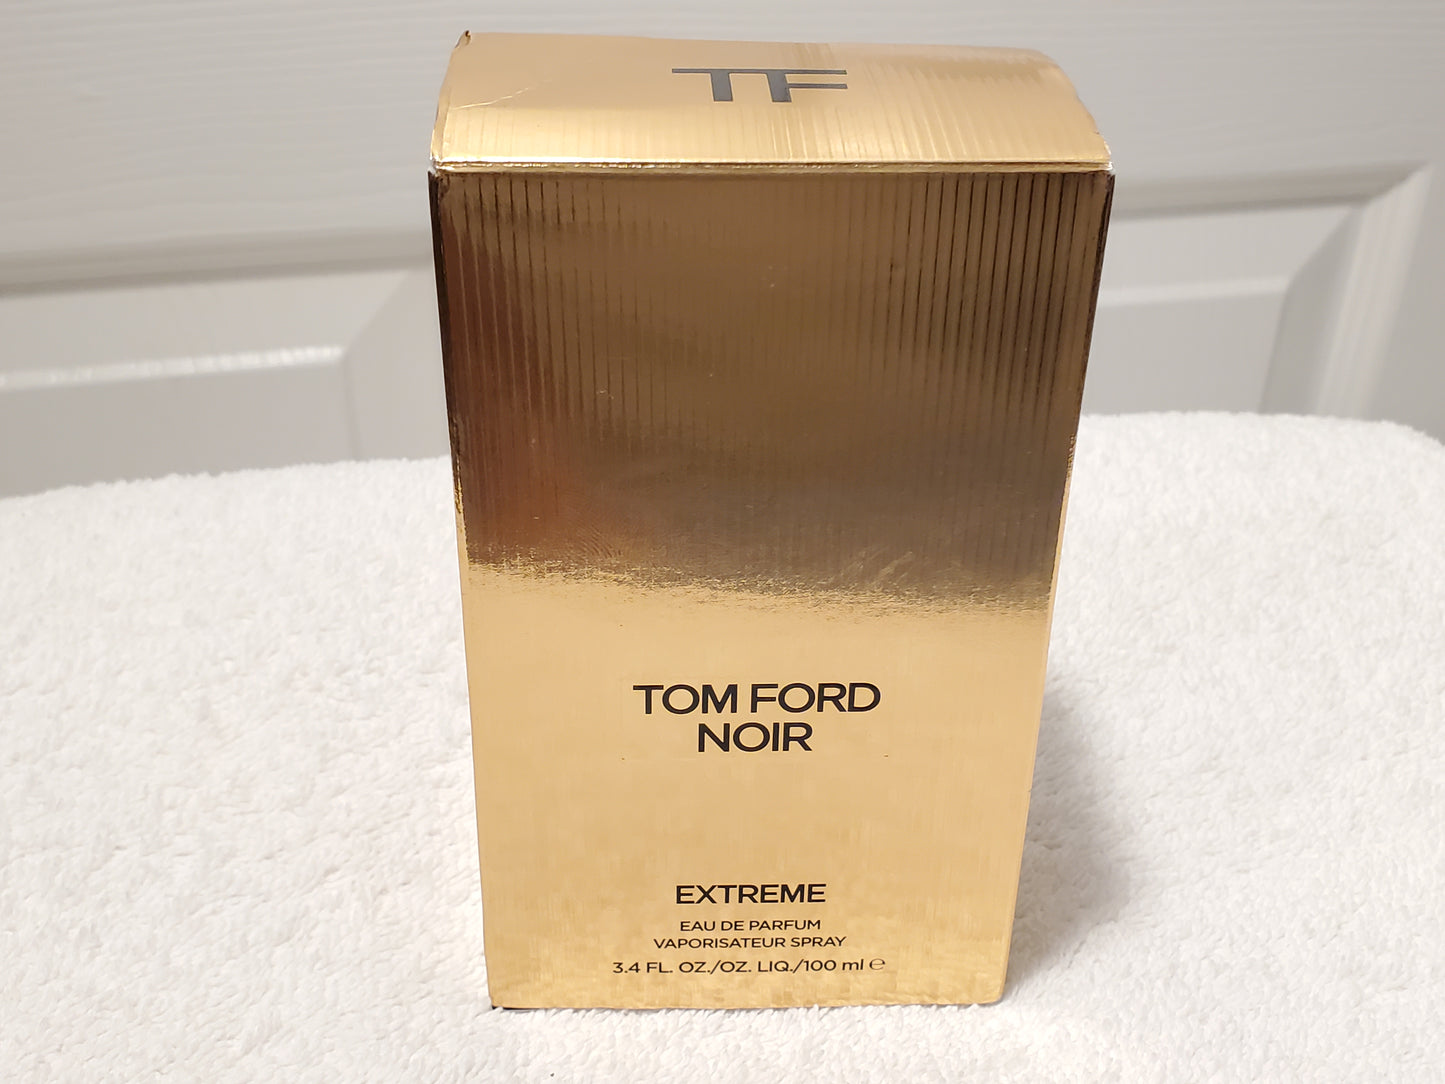 New Tom Ford Noir Extreme Men's Cologne Spray 3.4 oz Bottle Made in Switzerland